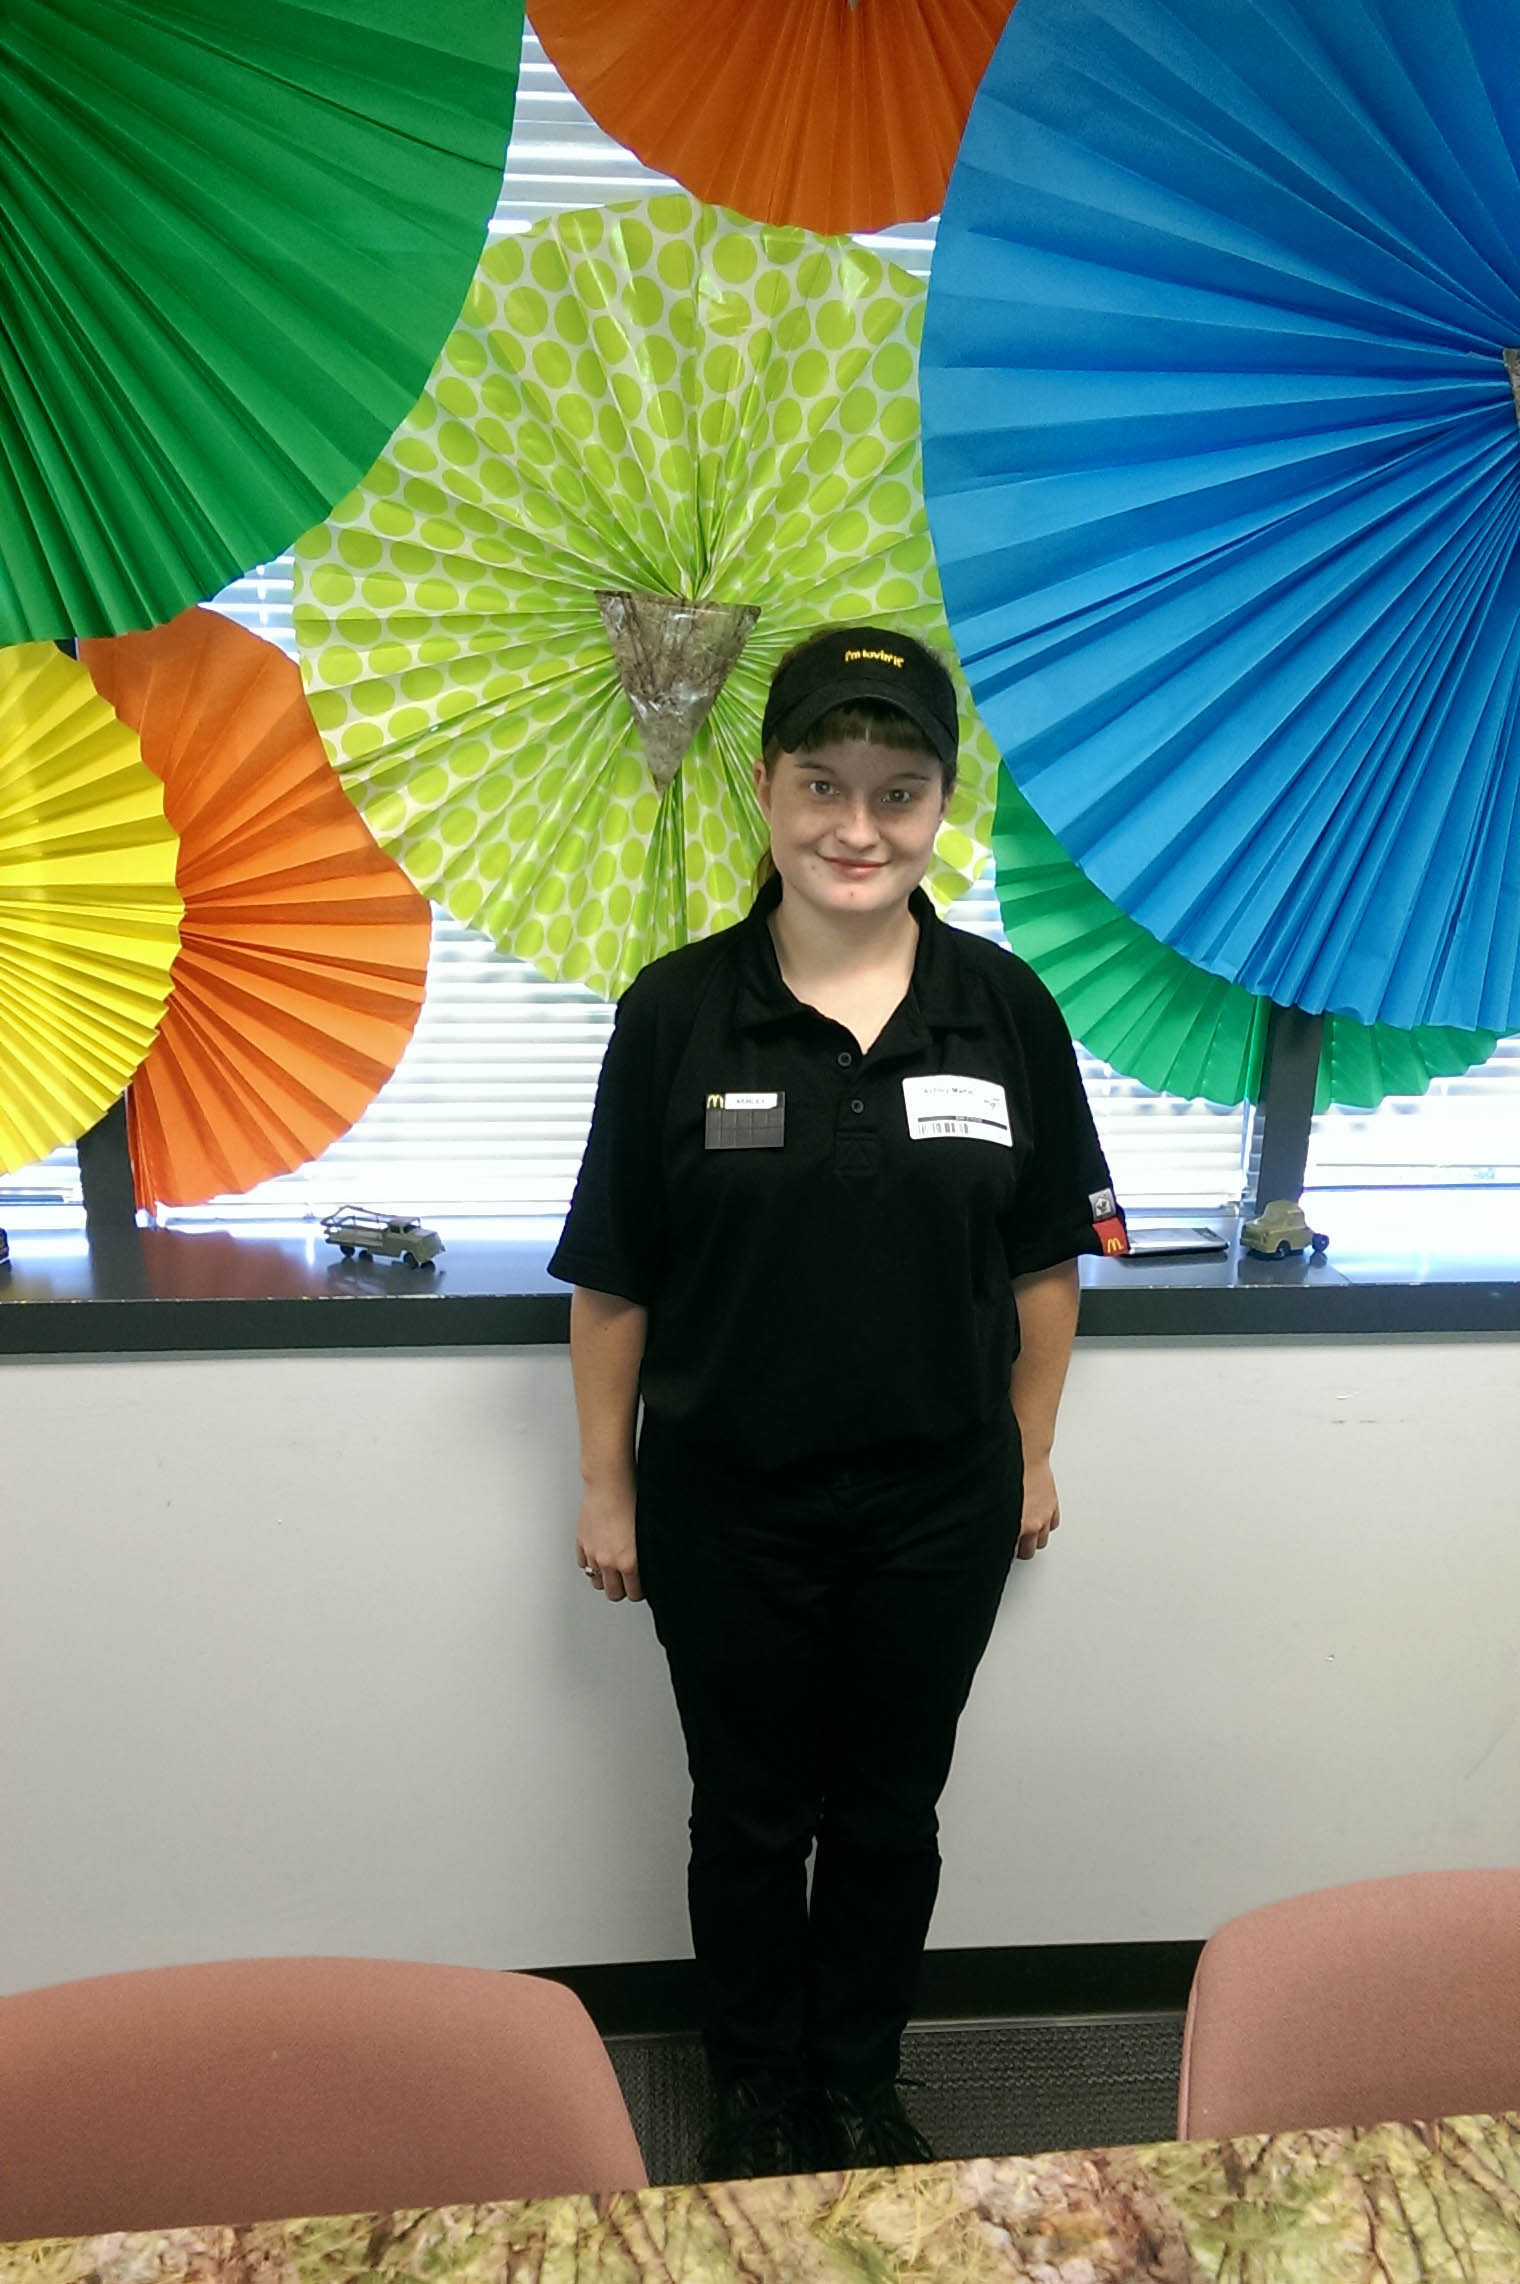 Ashley Martin in her McDonald’s uniform.